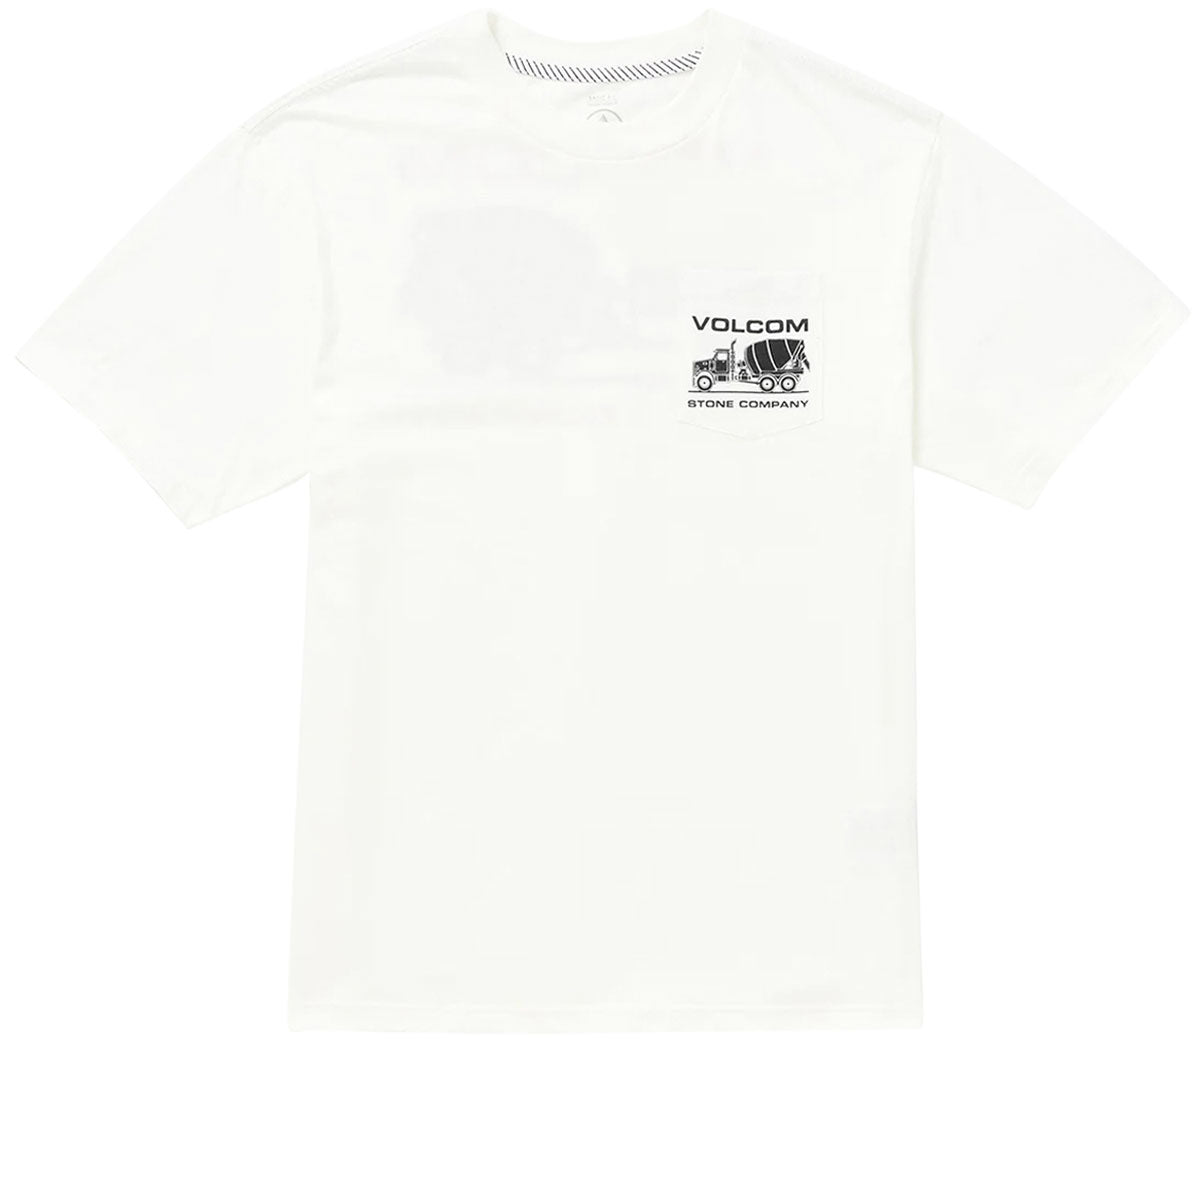 Volcom Skate Vitals Grant Taylor 1 T-Shirt - Off White image 1